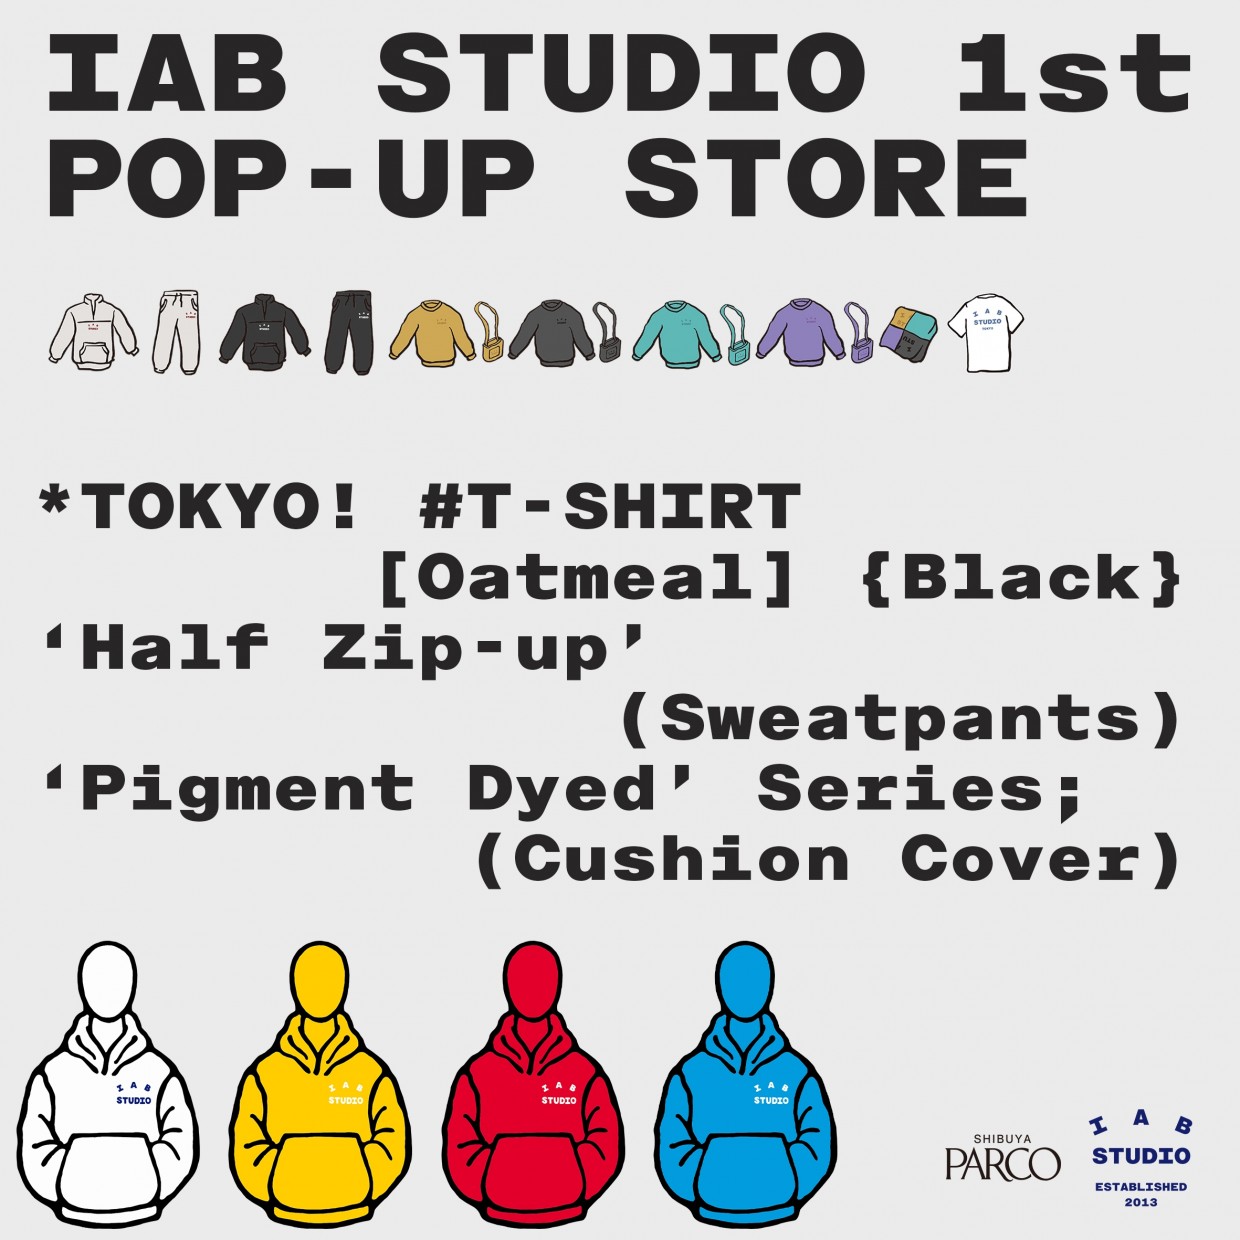 IAB-STUDIO POP UP STORE